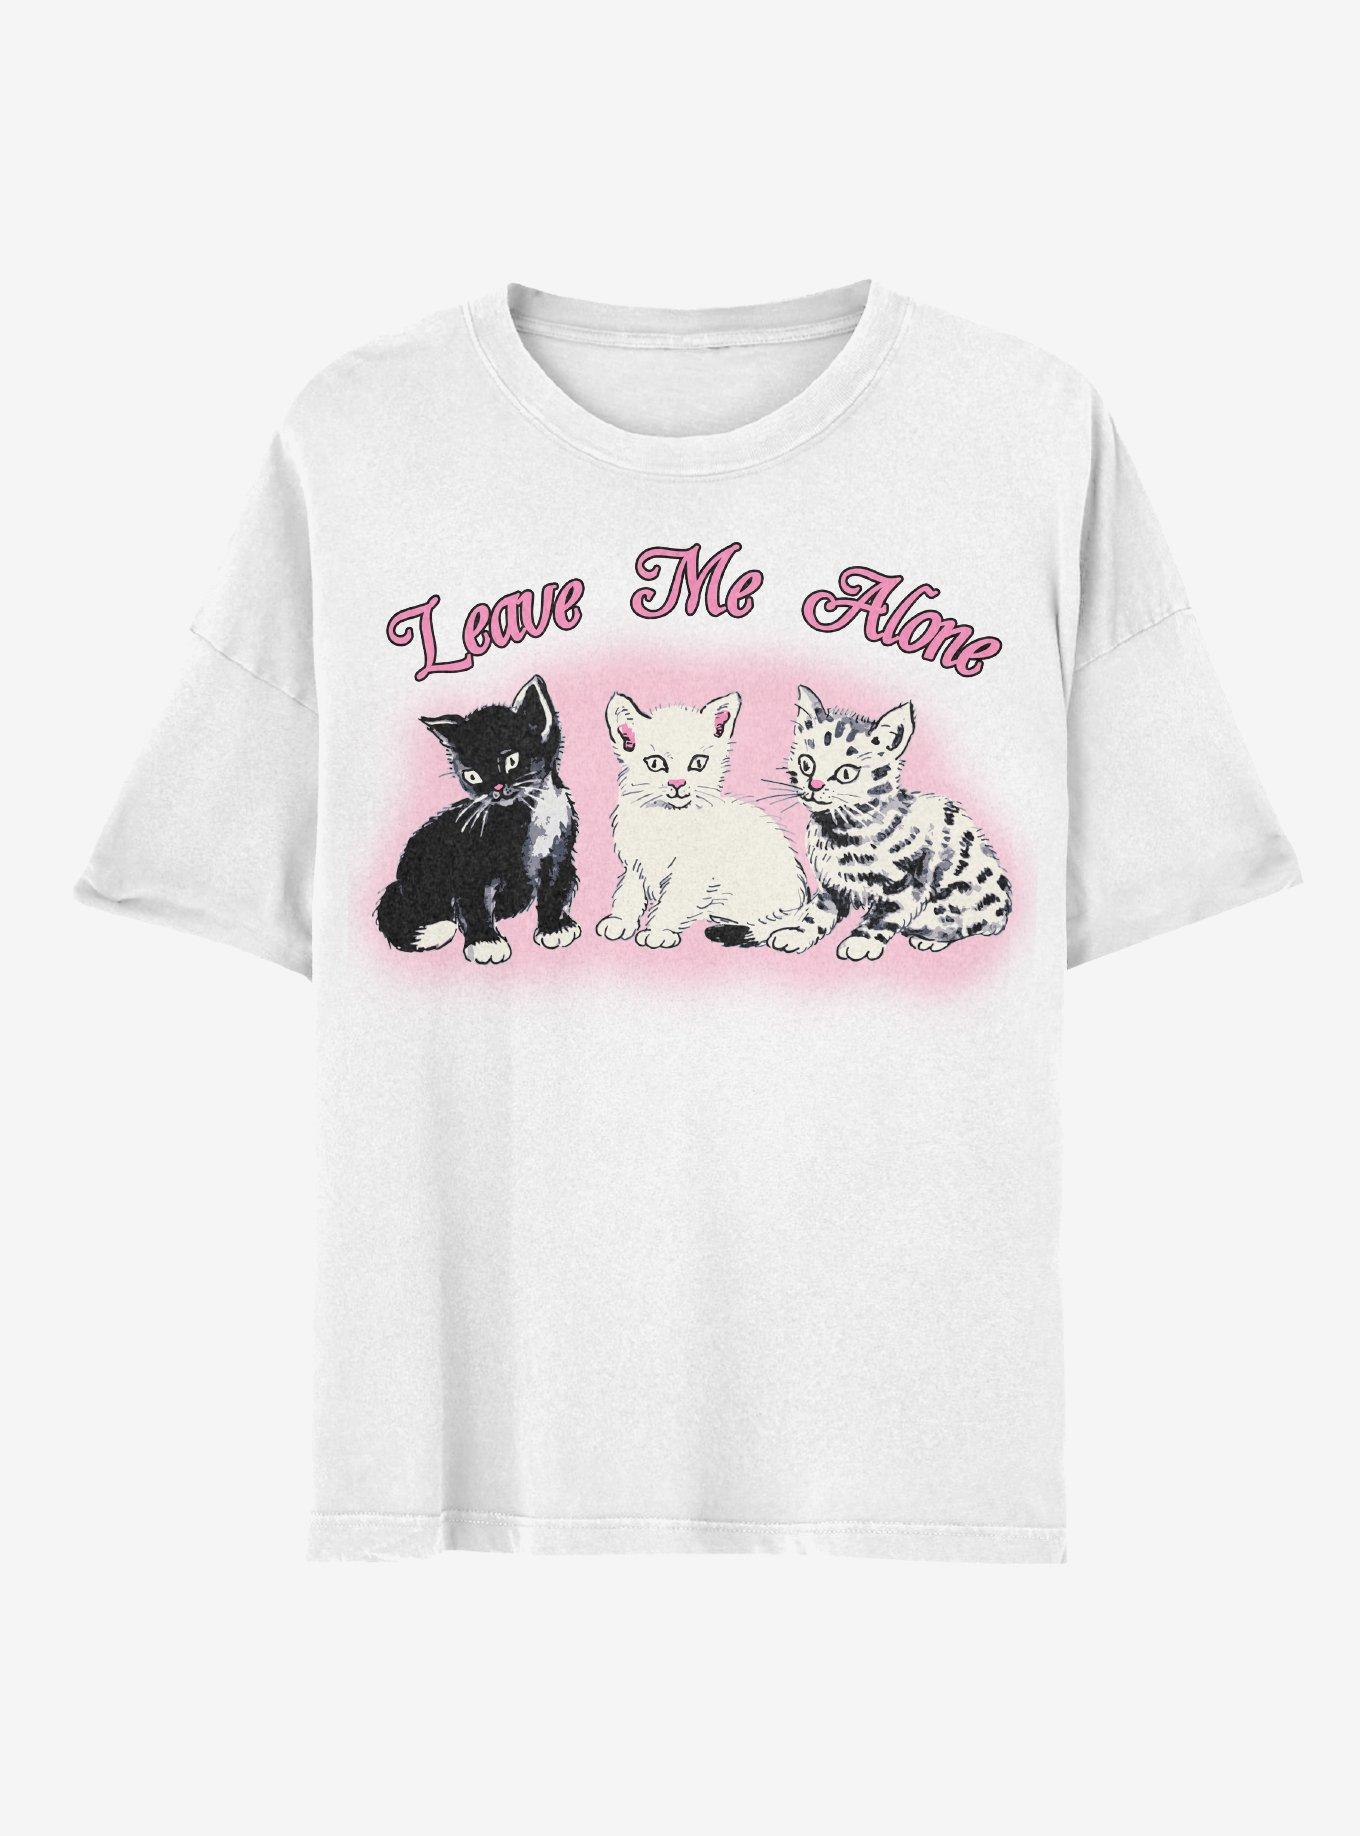 Leave Me Alone Cat Trio Boyfriend Fit Girls T-Shirt